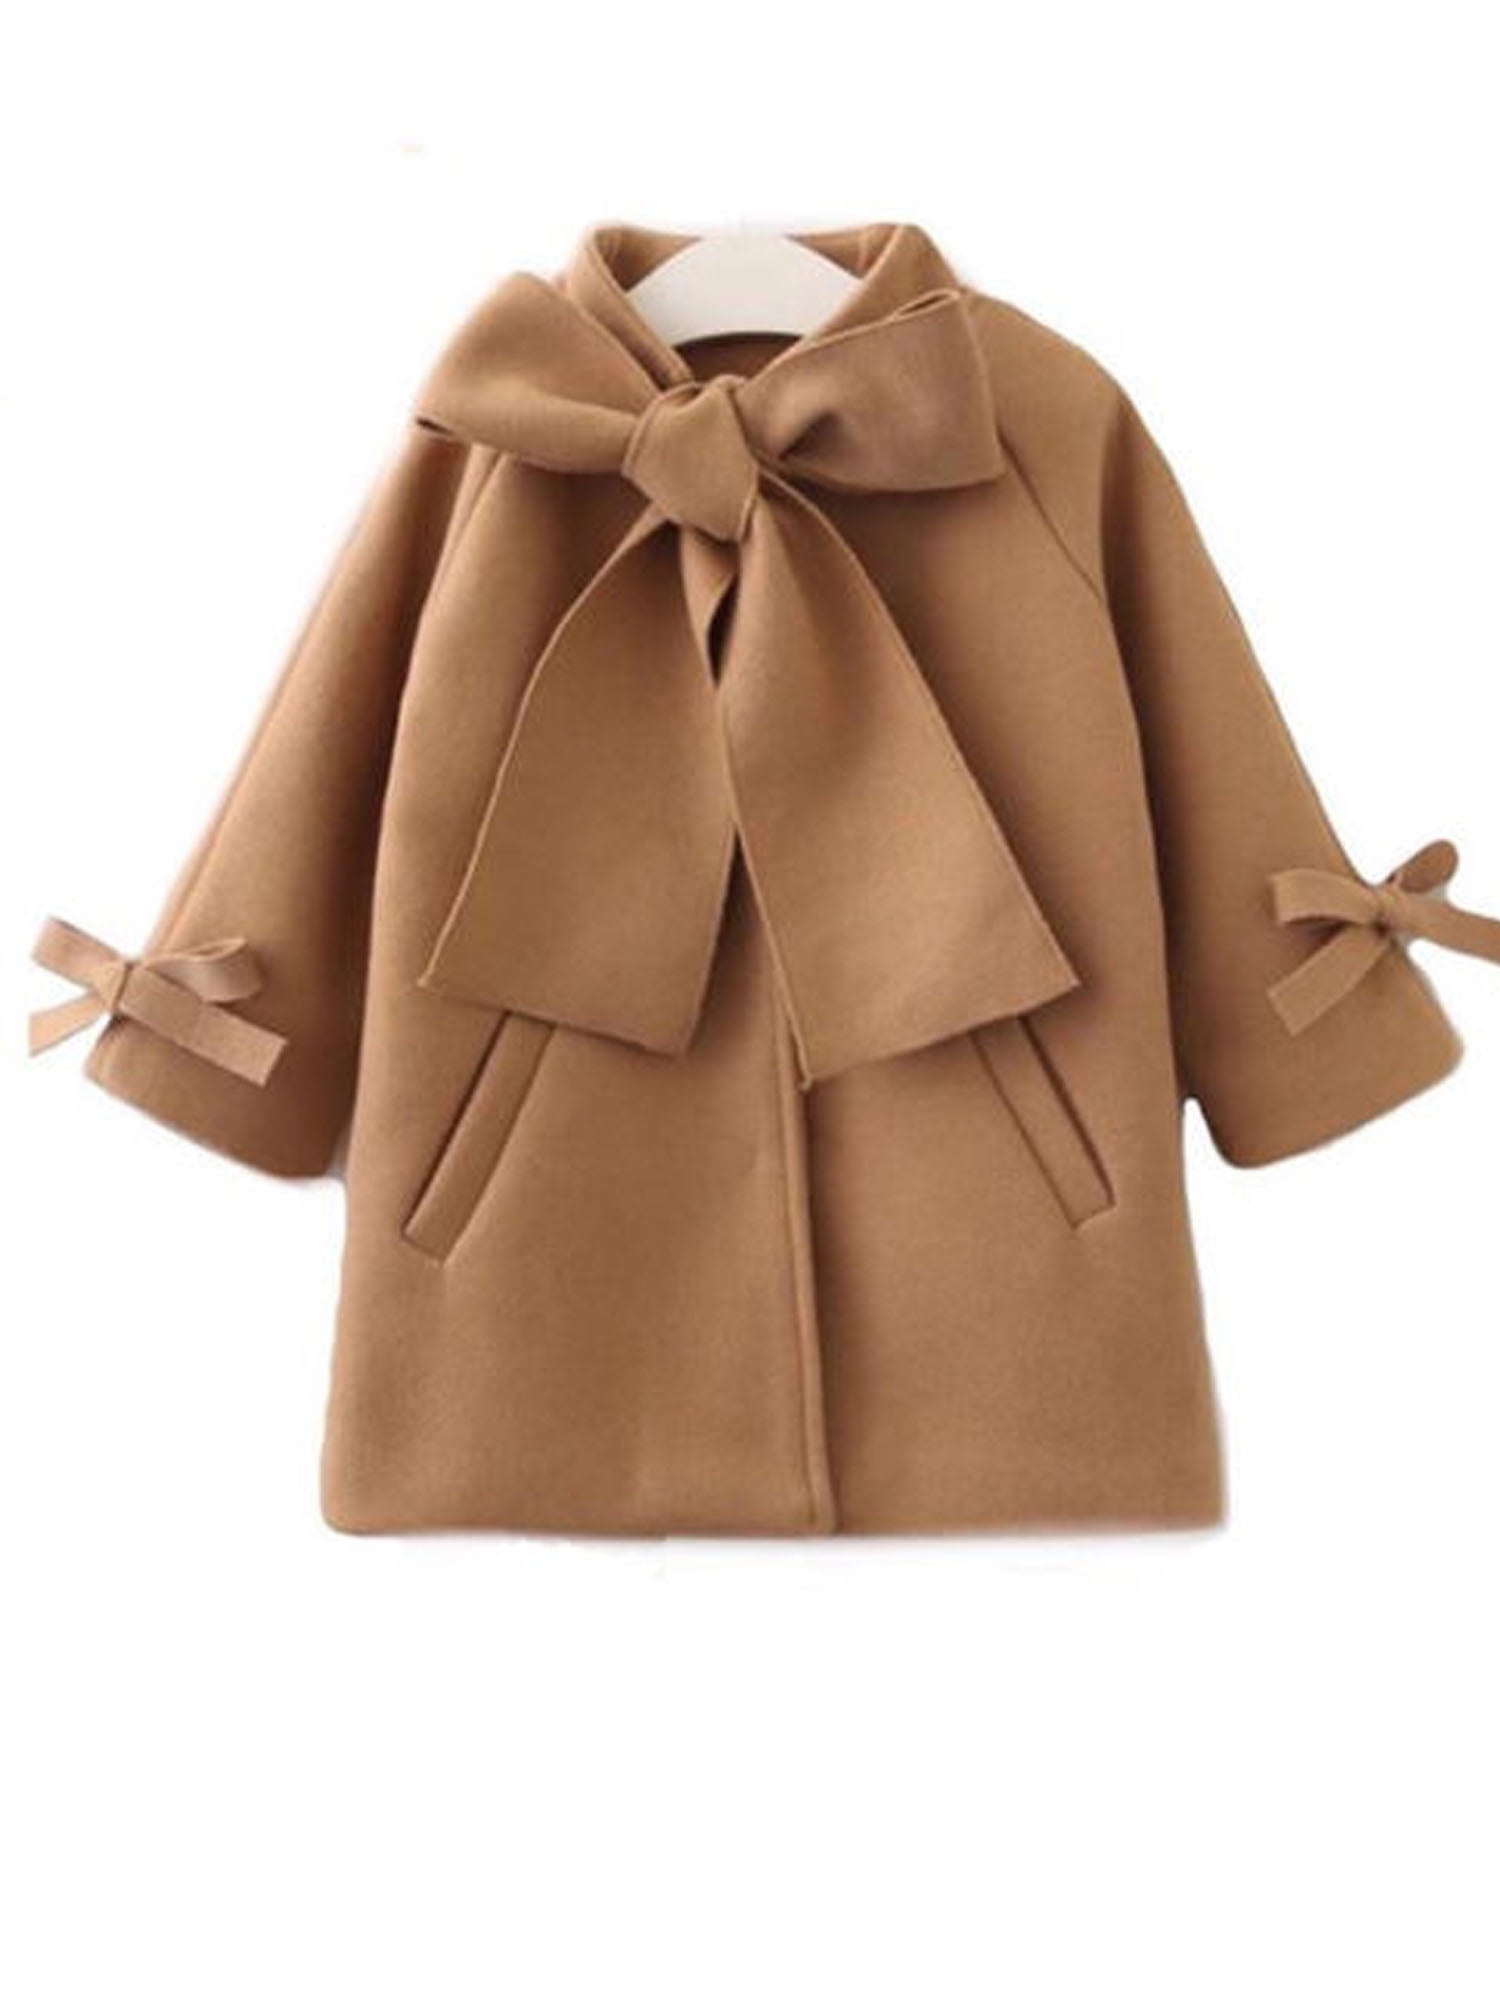 Kids Baby Girls Bow Long Trench Coat Cloak Winter Outerwear Wind Princess Jacket 